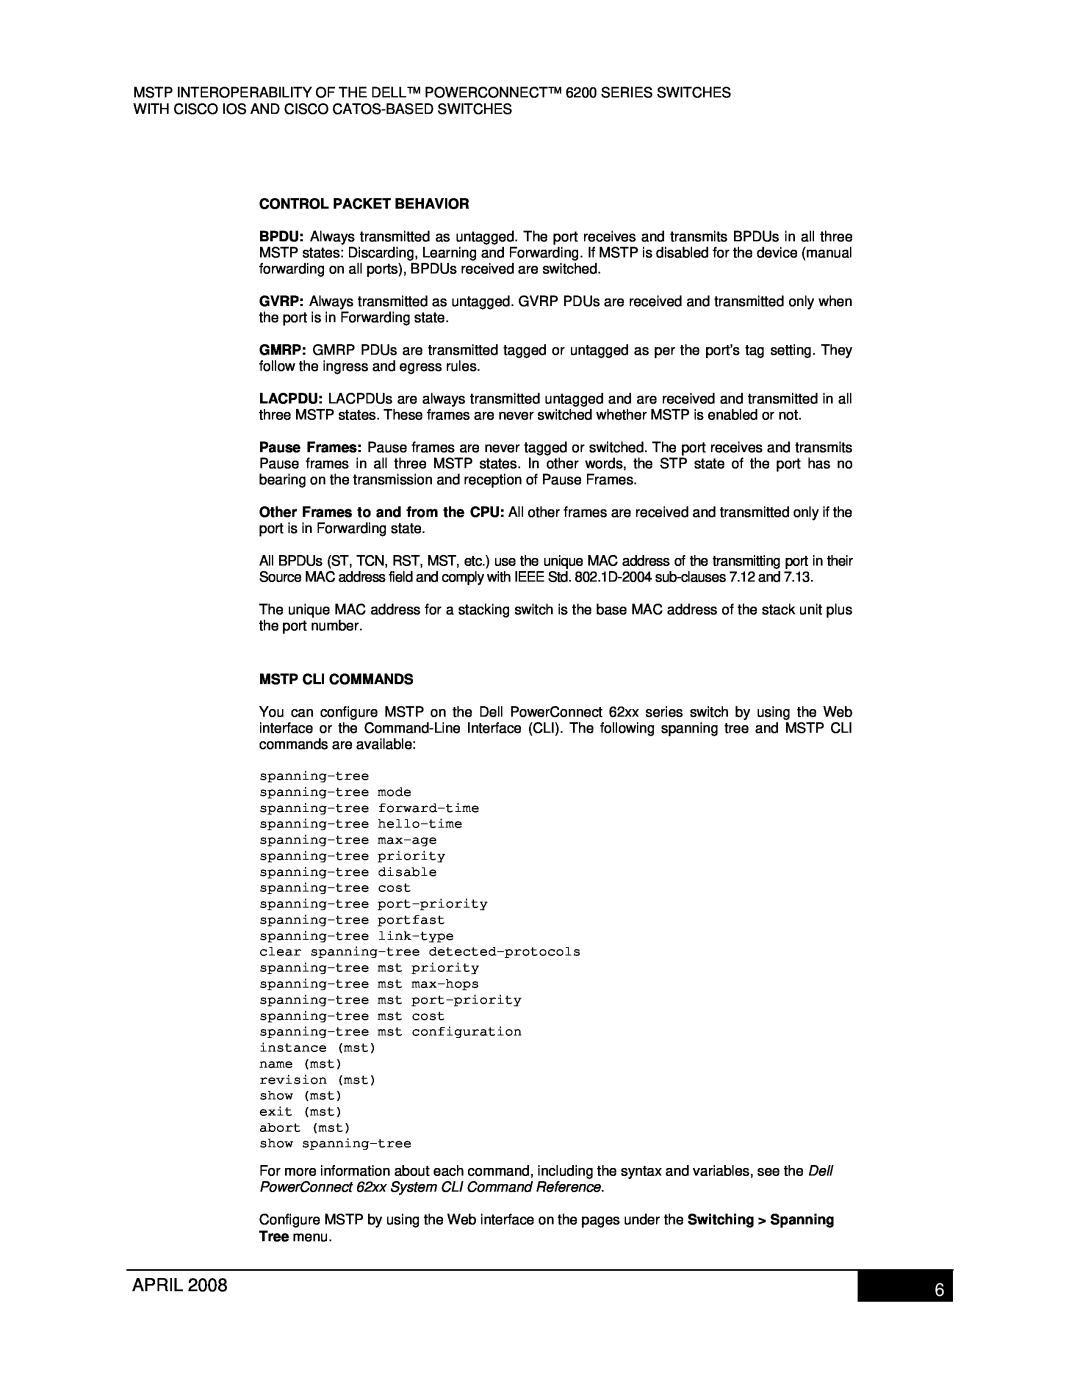 Dell 6200 manual Control Packet Behavior, Mstp Cli Commands, April, show spanning-tree 